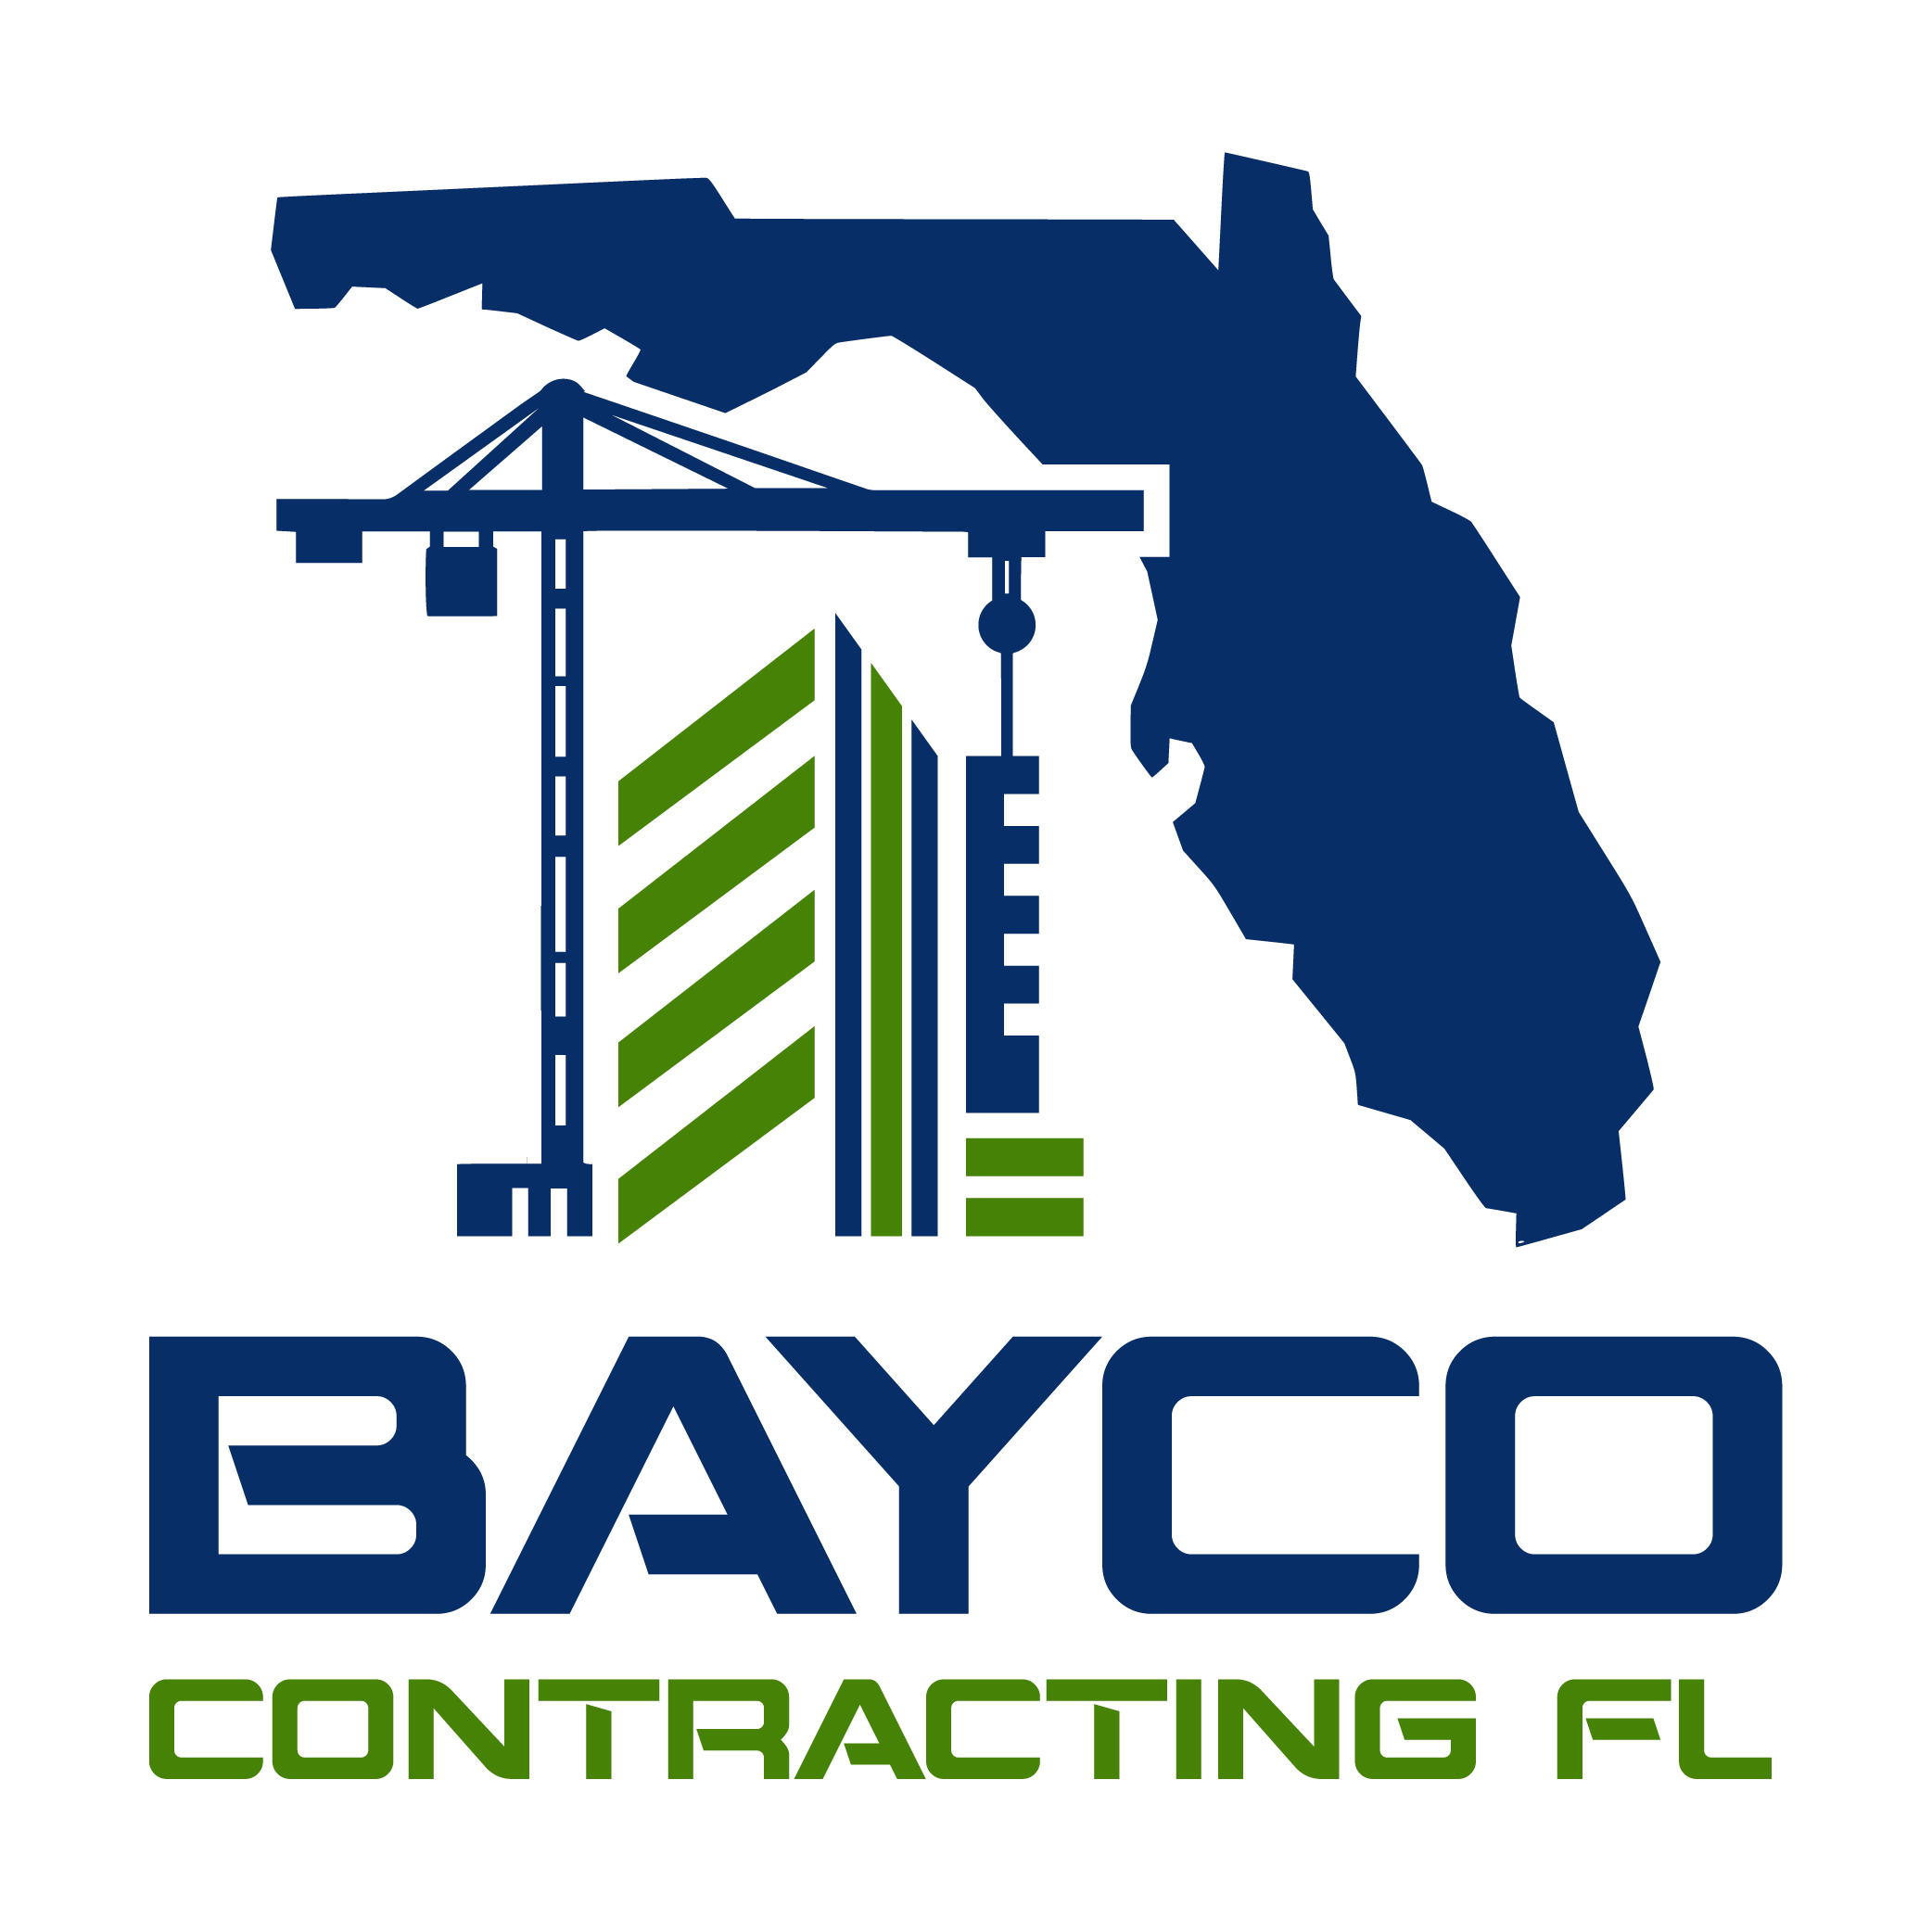 Bayco Contracting FL